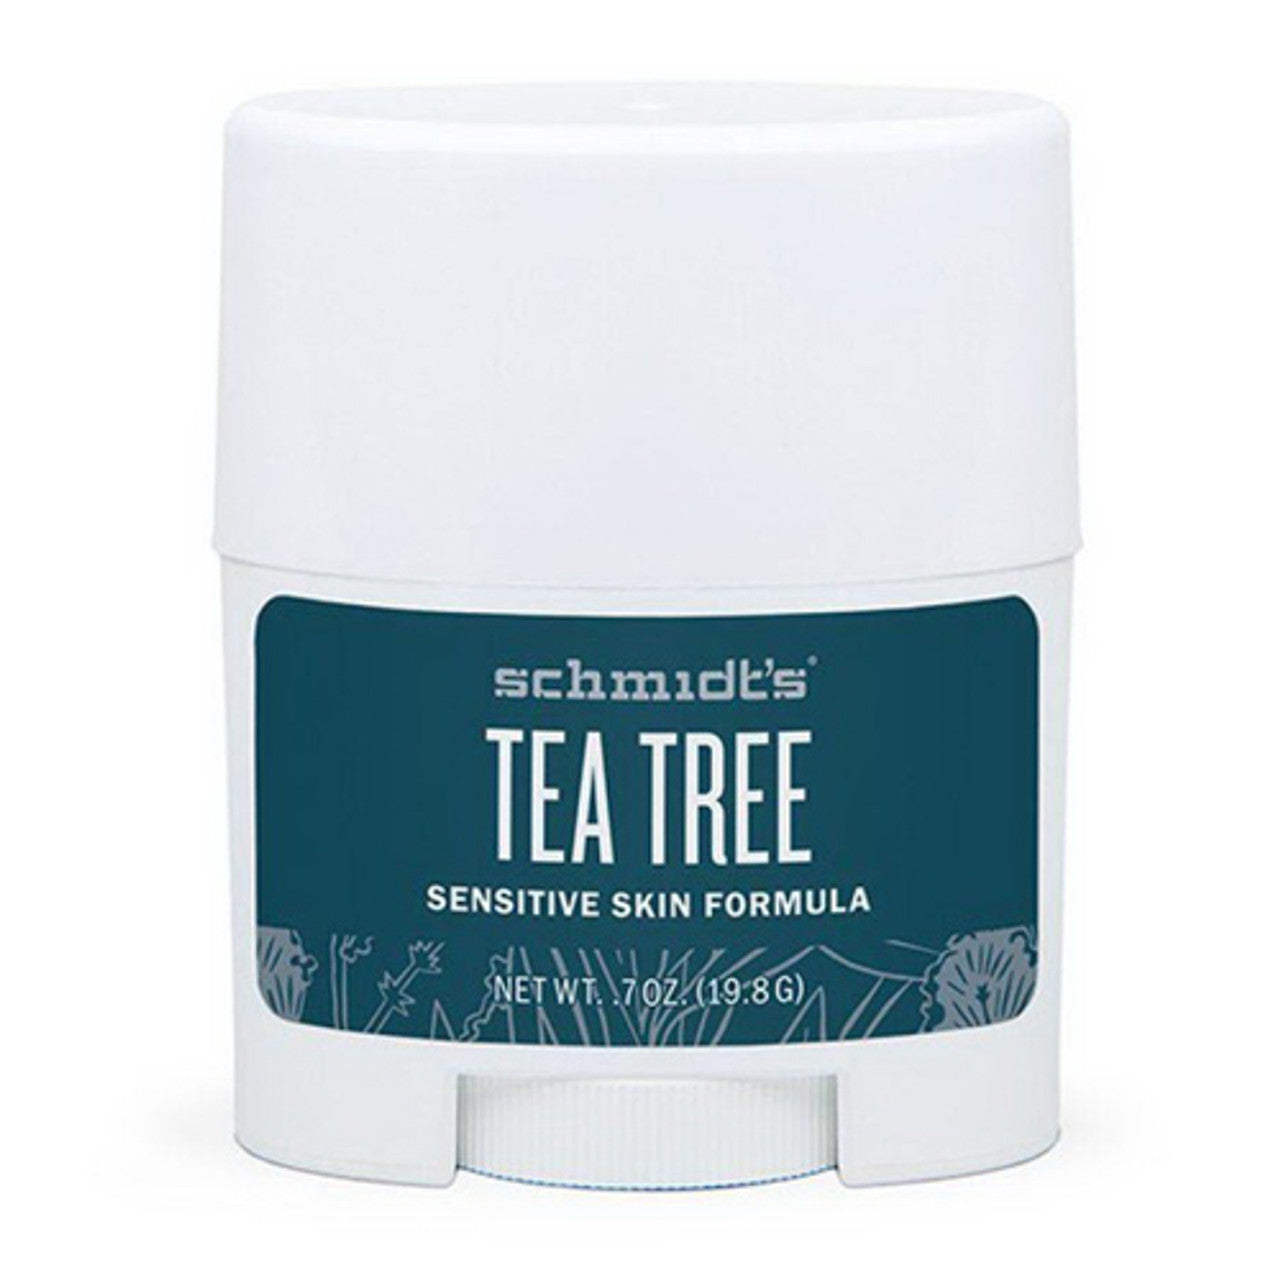 Schmidts Travel Size Sensitive Skin Deodorant Stick Tea Tree, 0.7 Oz